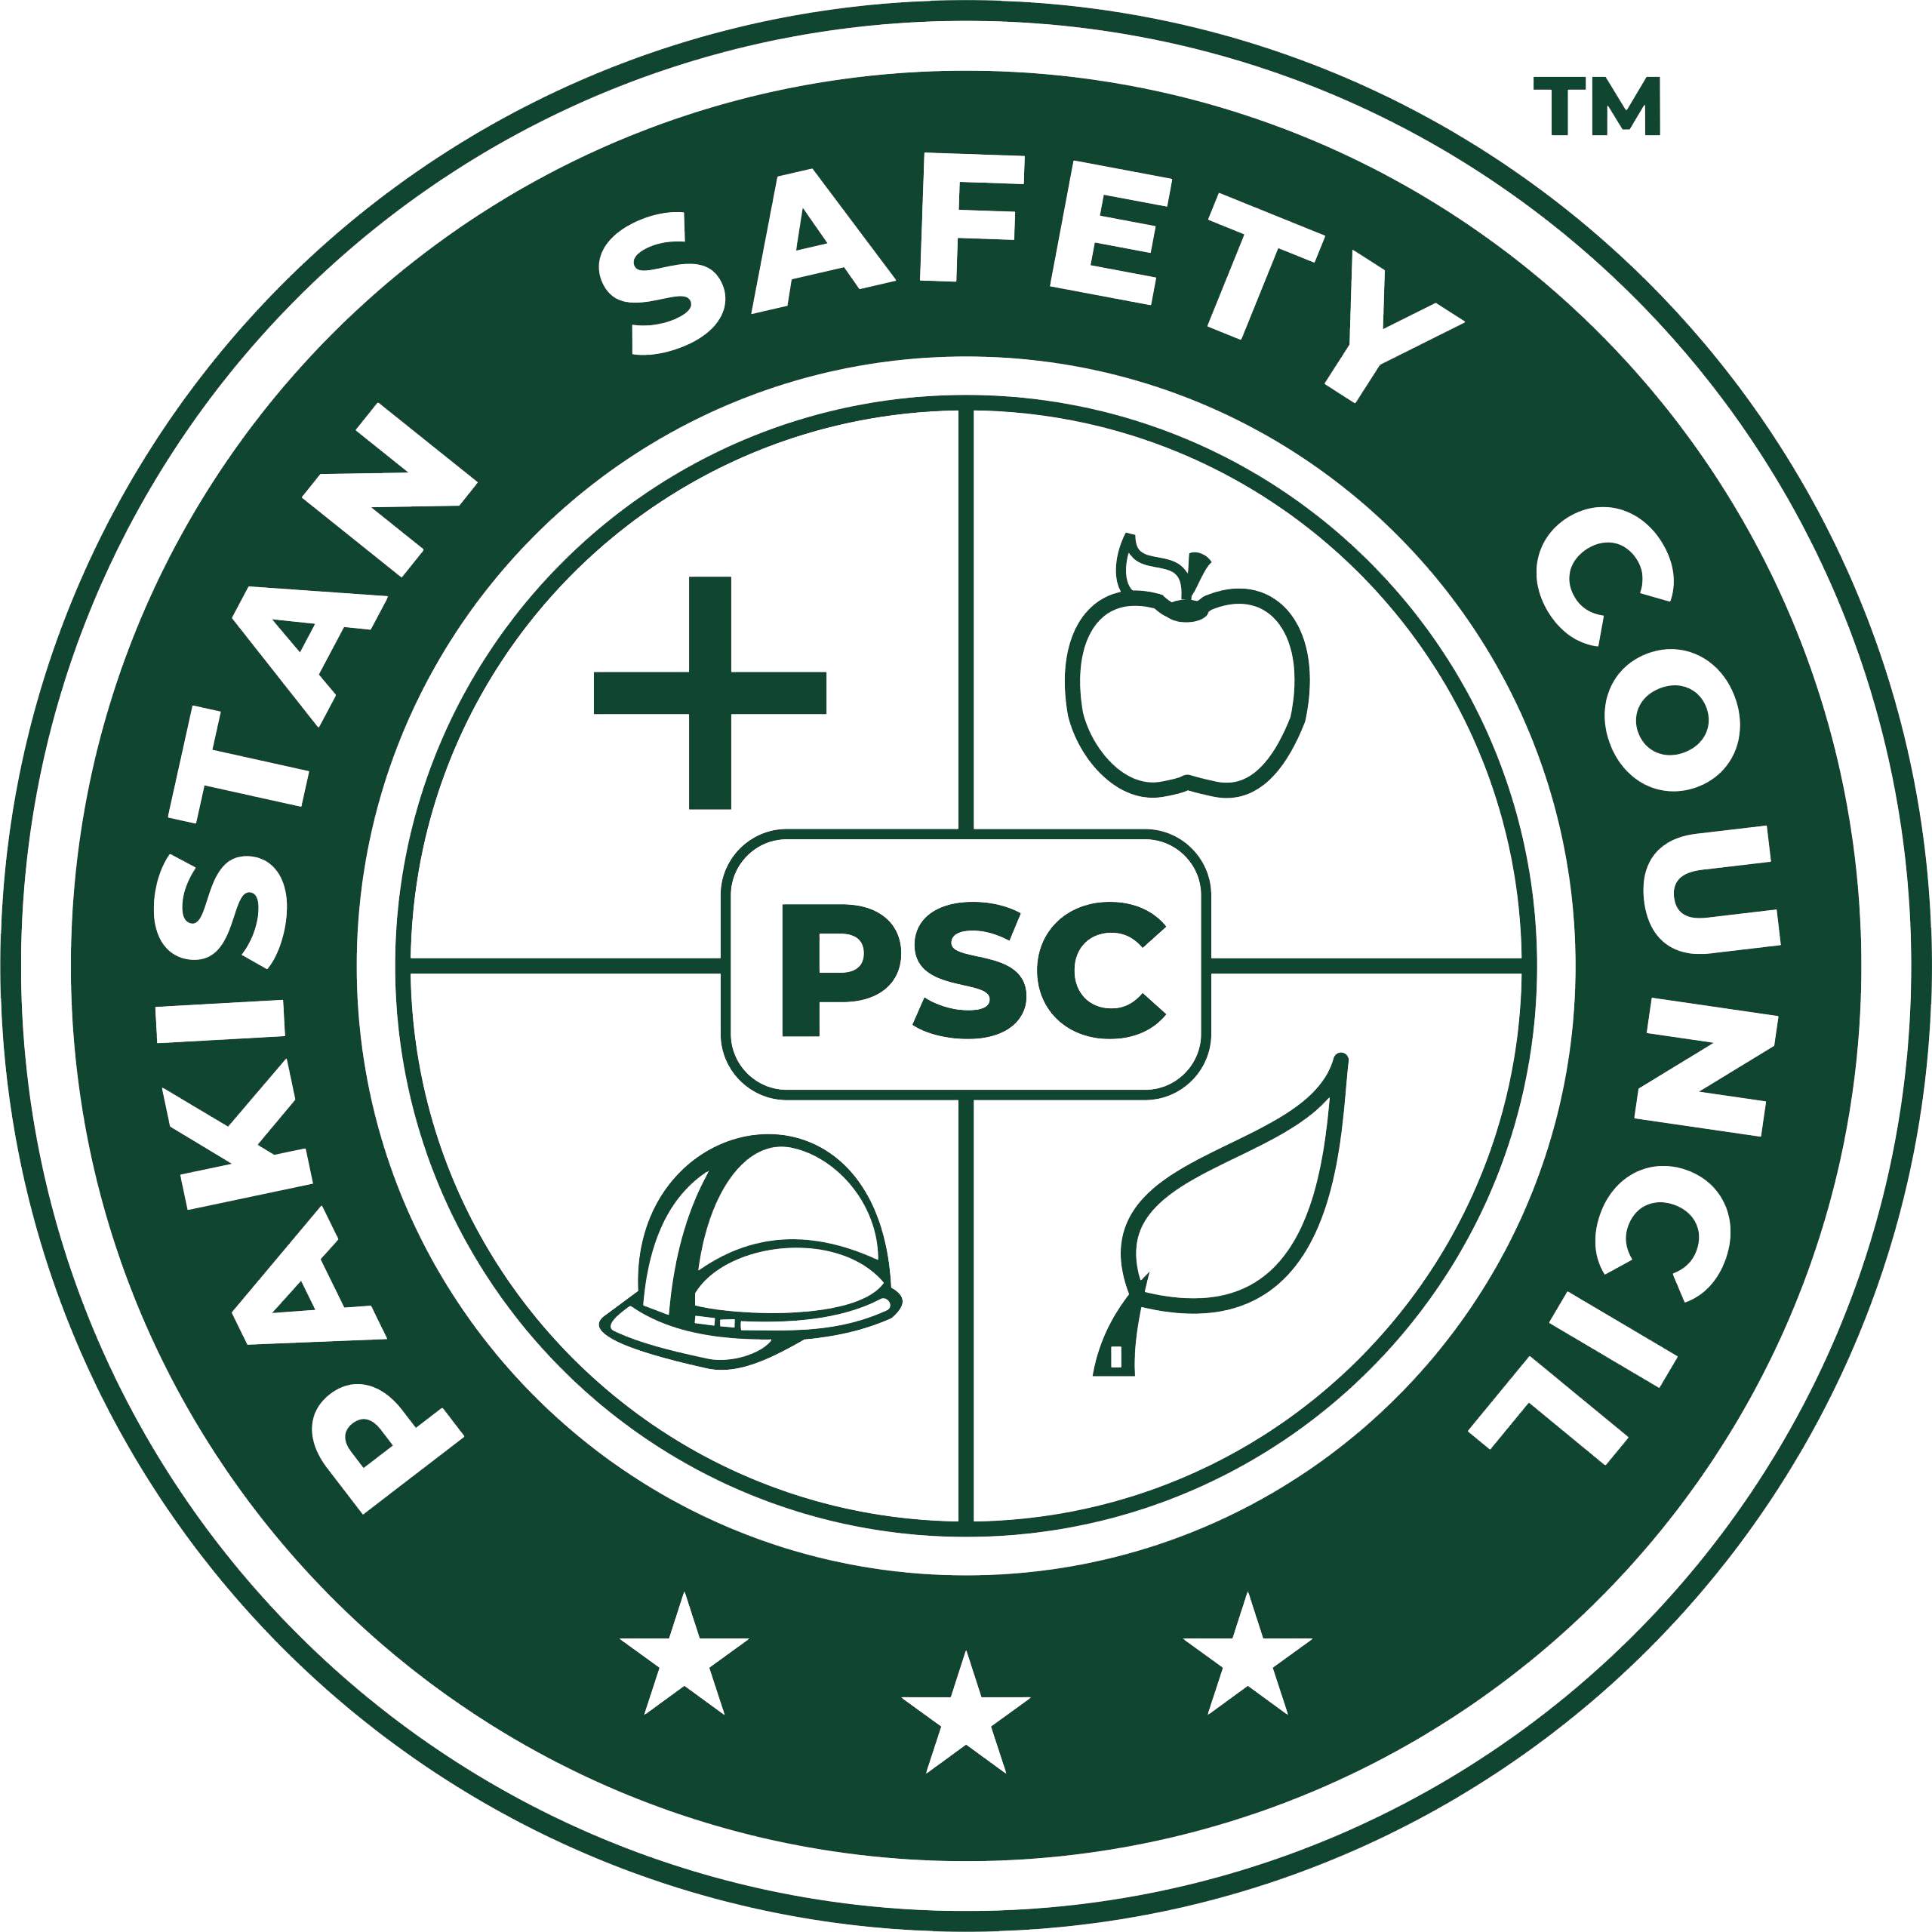 Pakistan Safety Council - PSC®